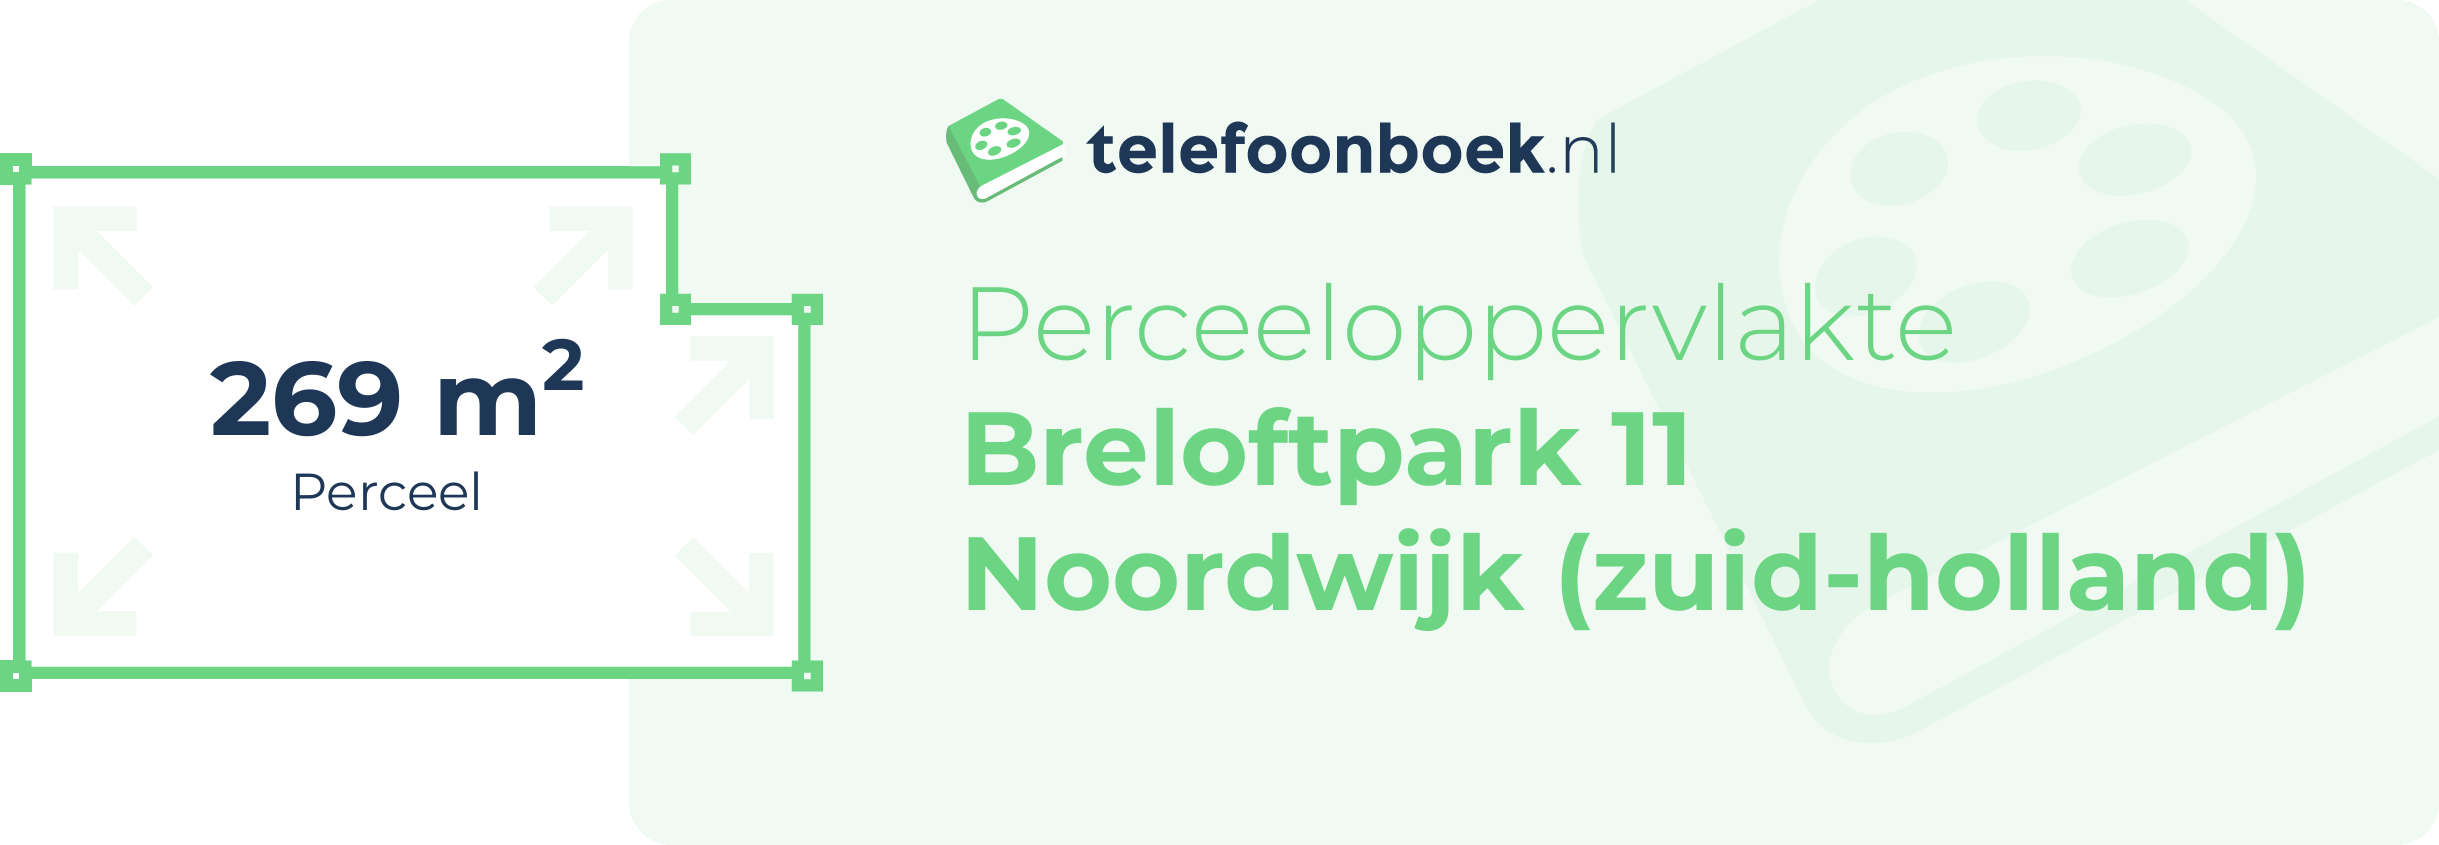 Perceeloppervlakte Breloftpark 11 Noordwijk (Zuid-Holland)